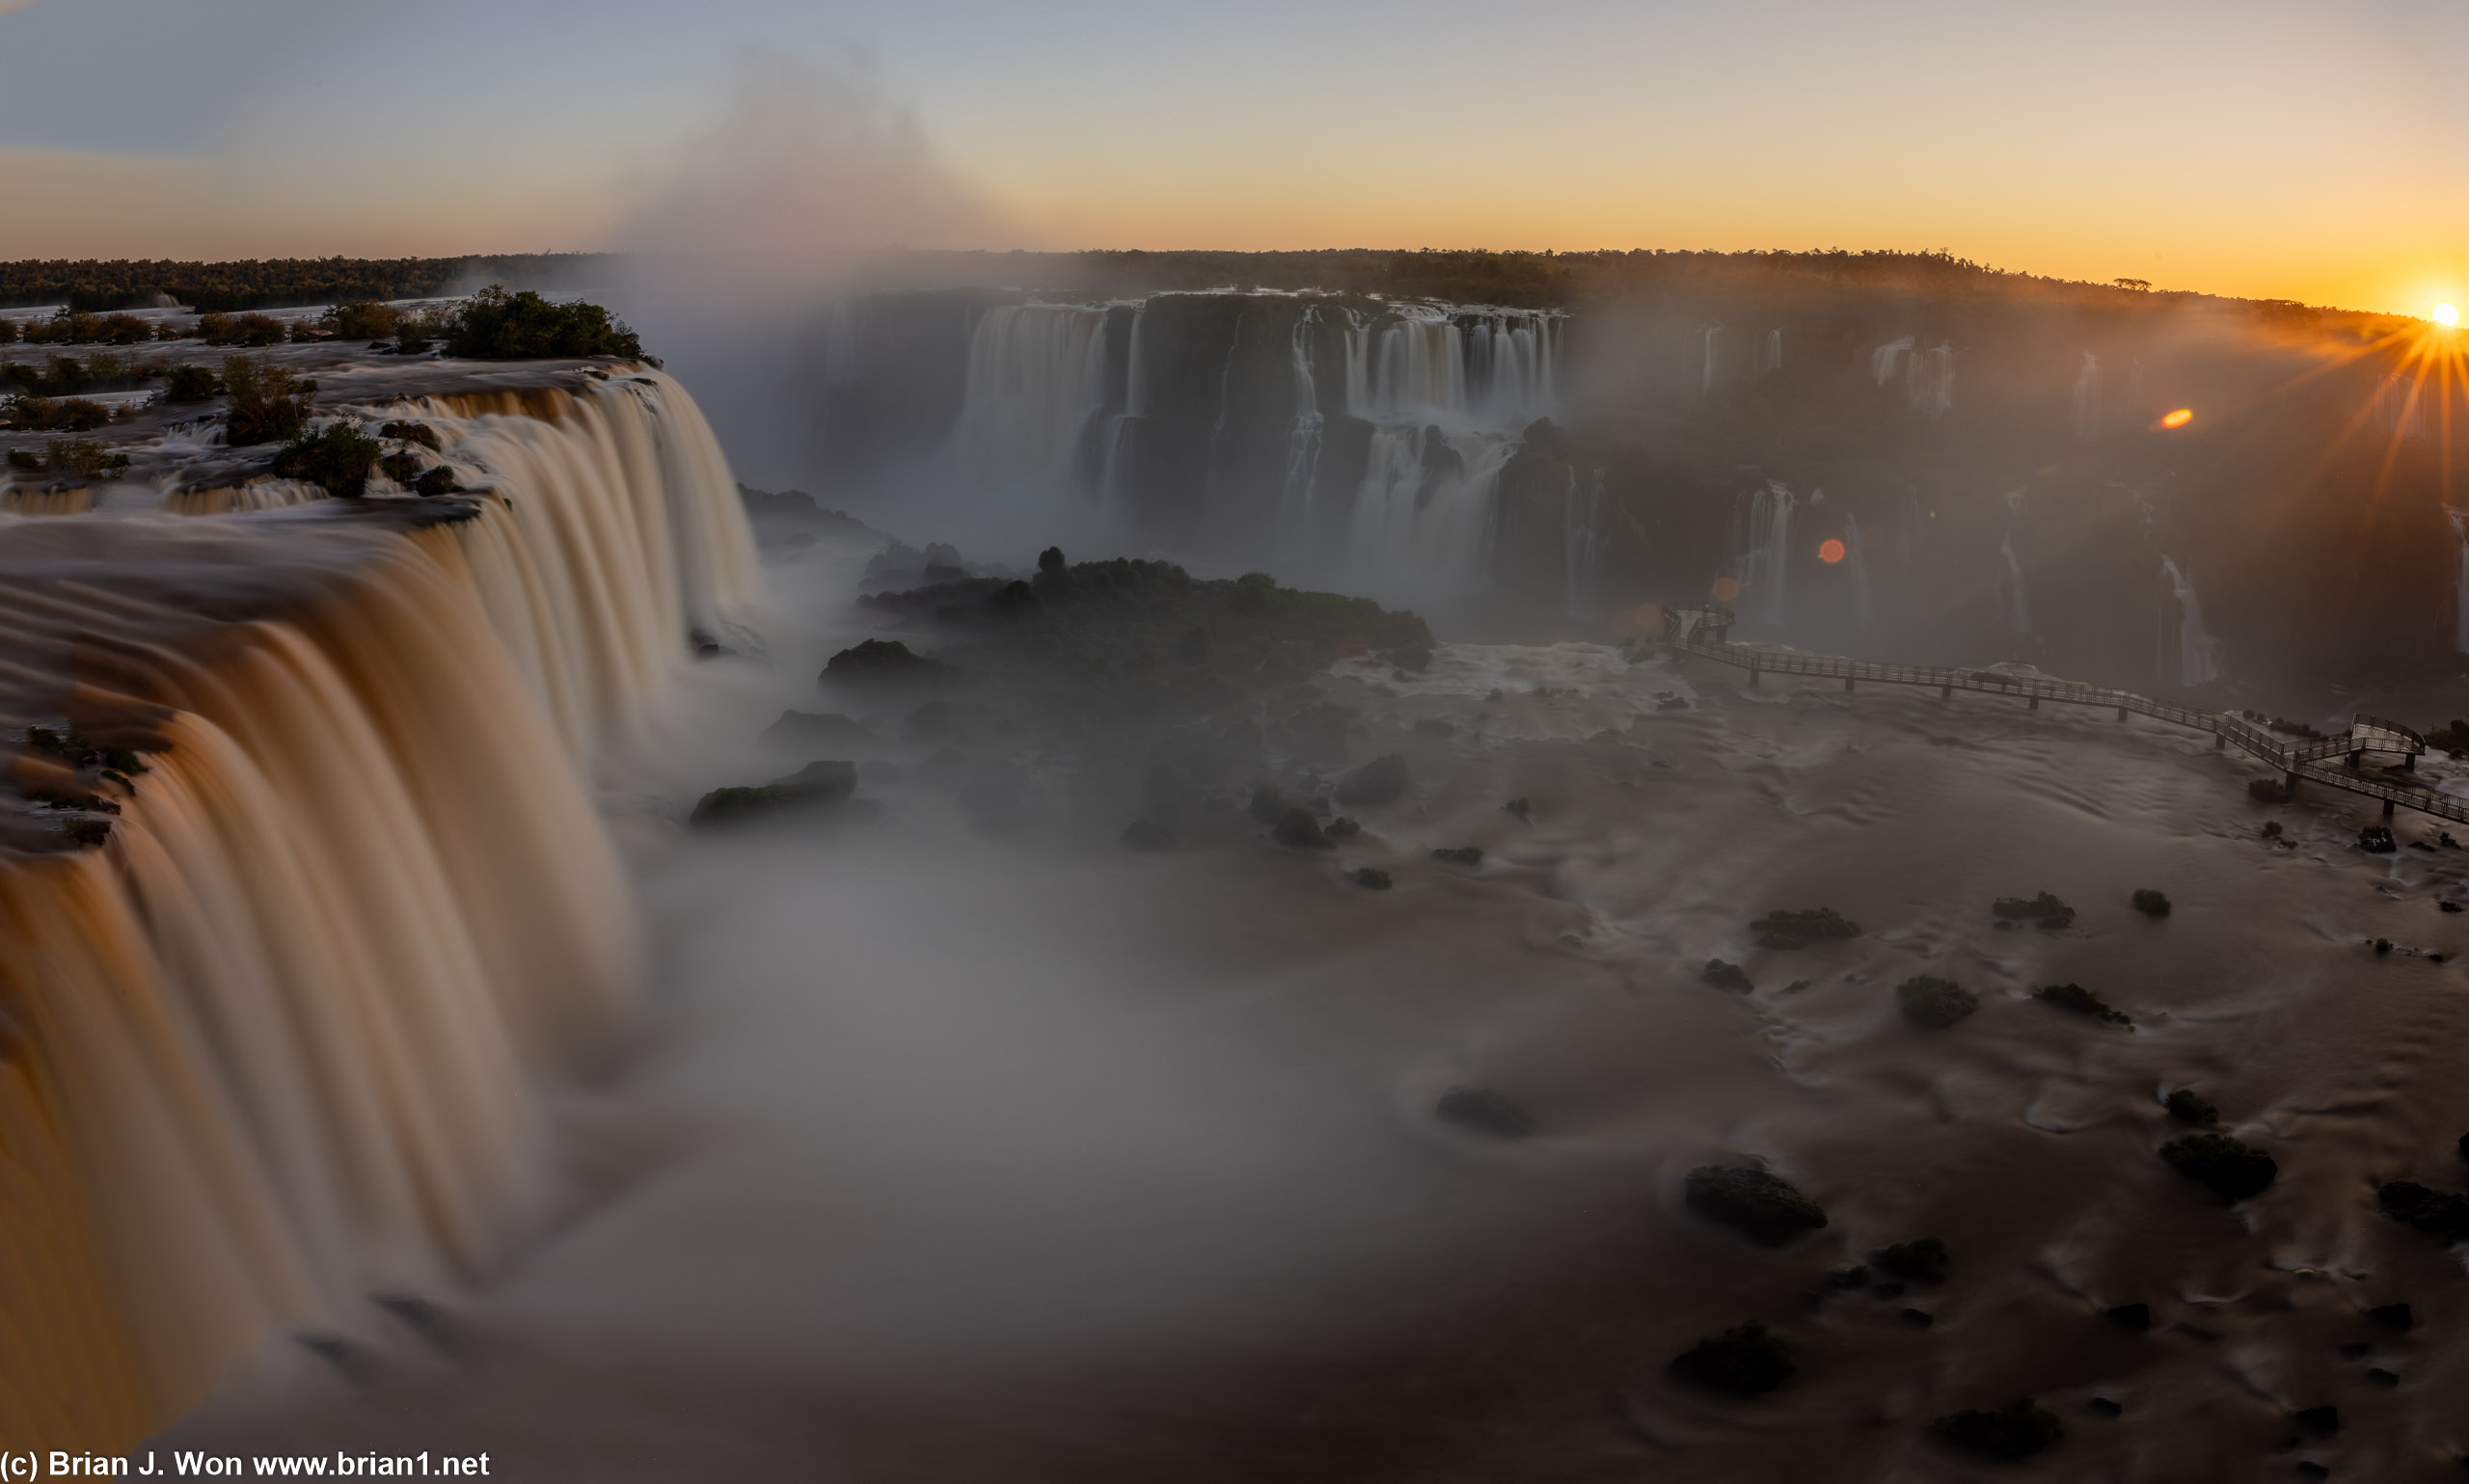 One last sunset at Iguazu Falls.